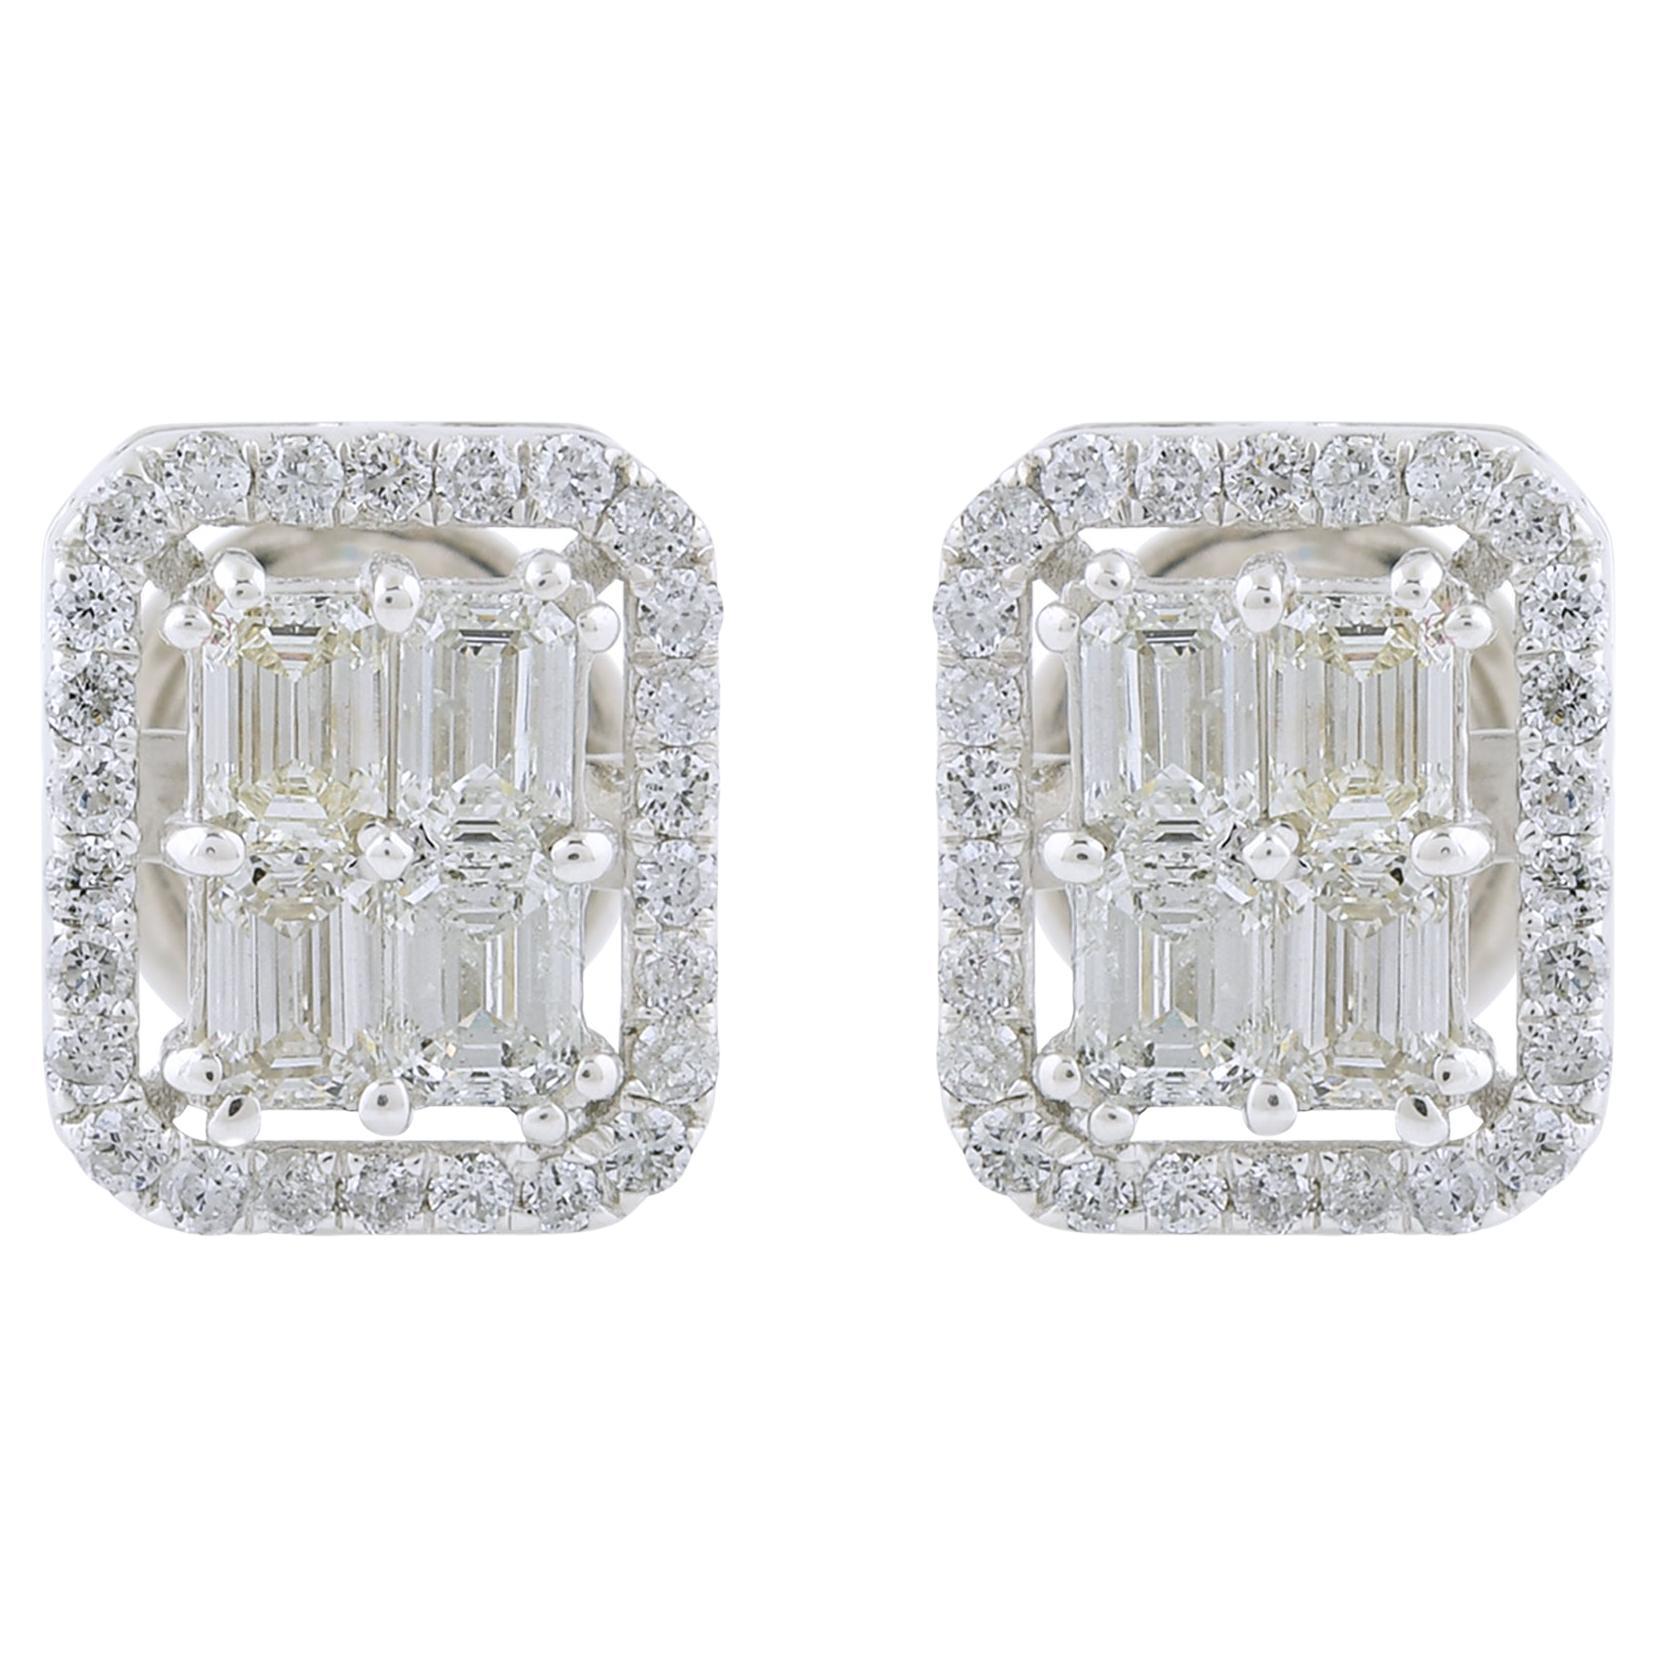 1.08 Carat SI Clarity HI Color Emerald Cut Diamond Stud Earrings 18k White Gold For Sale